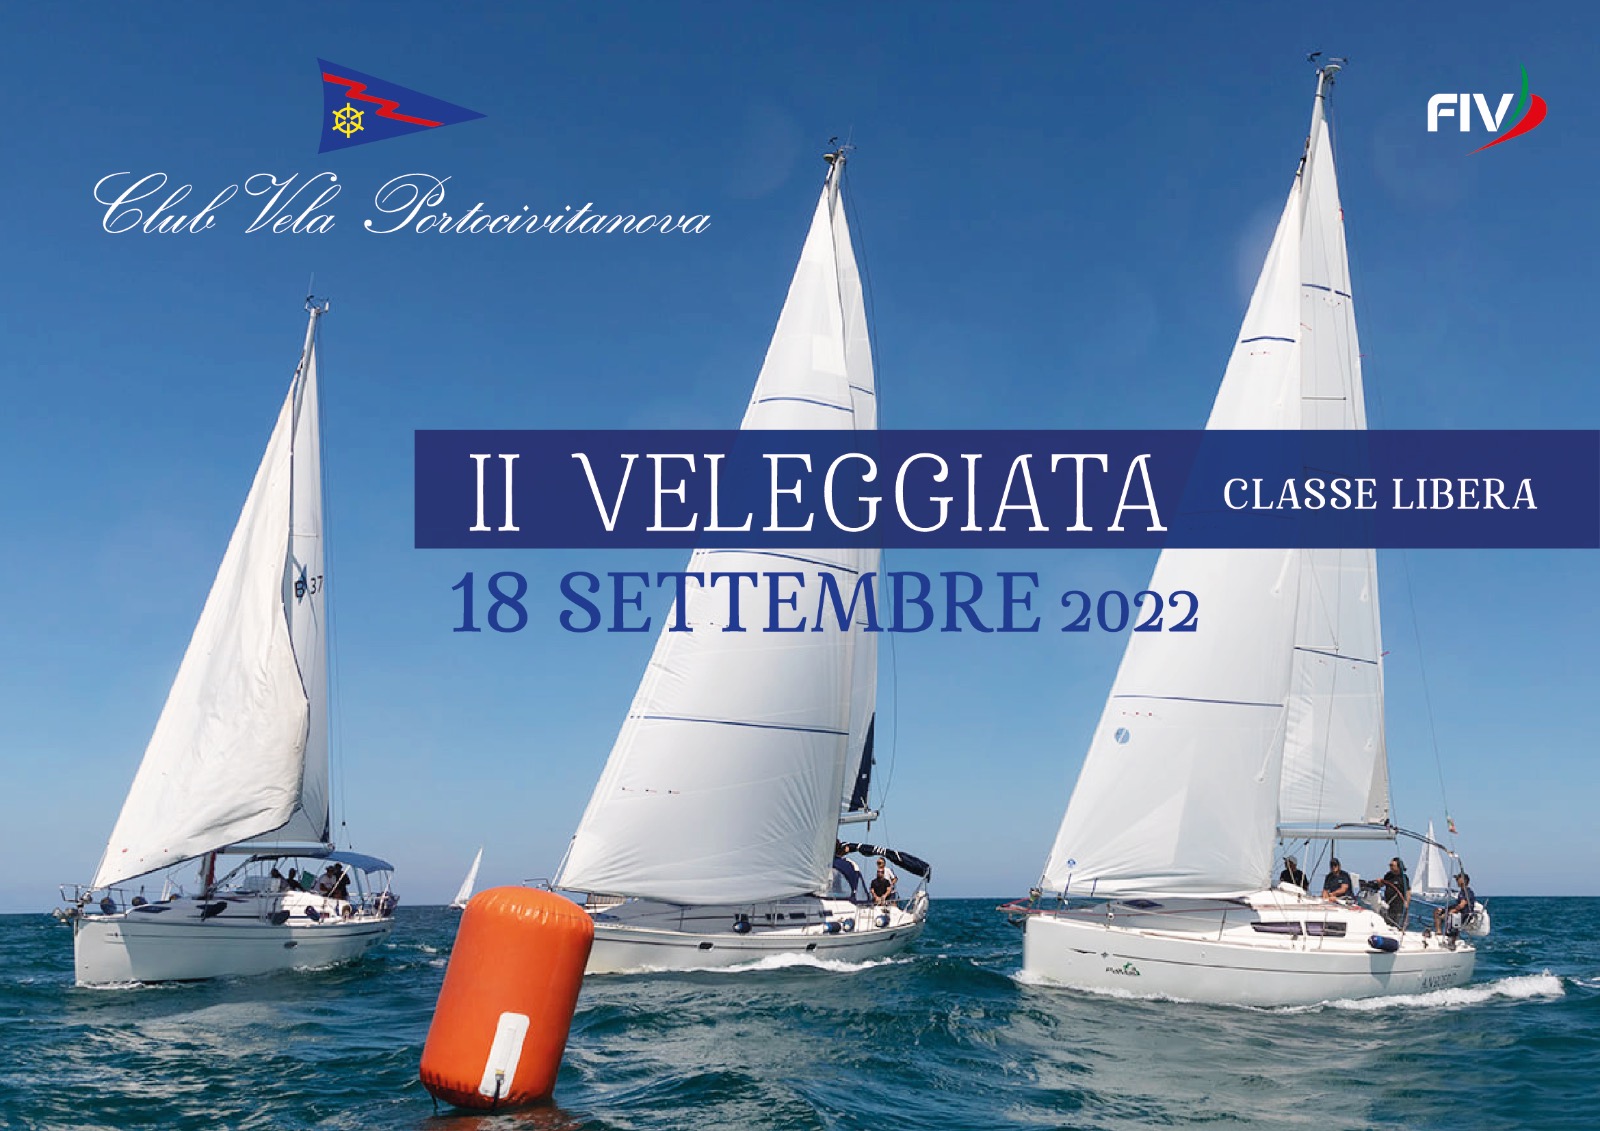 18 settembre 2022 – II^ VELEGGIATA (classe libera)